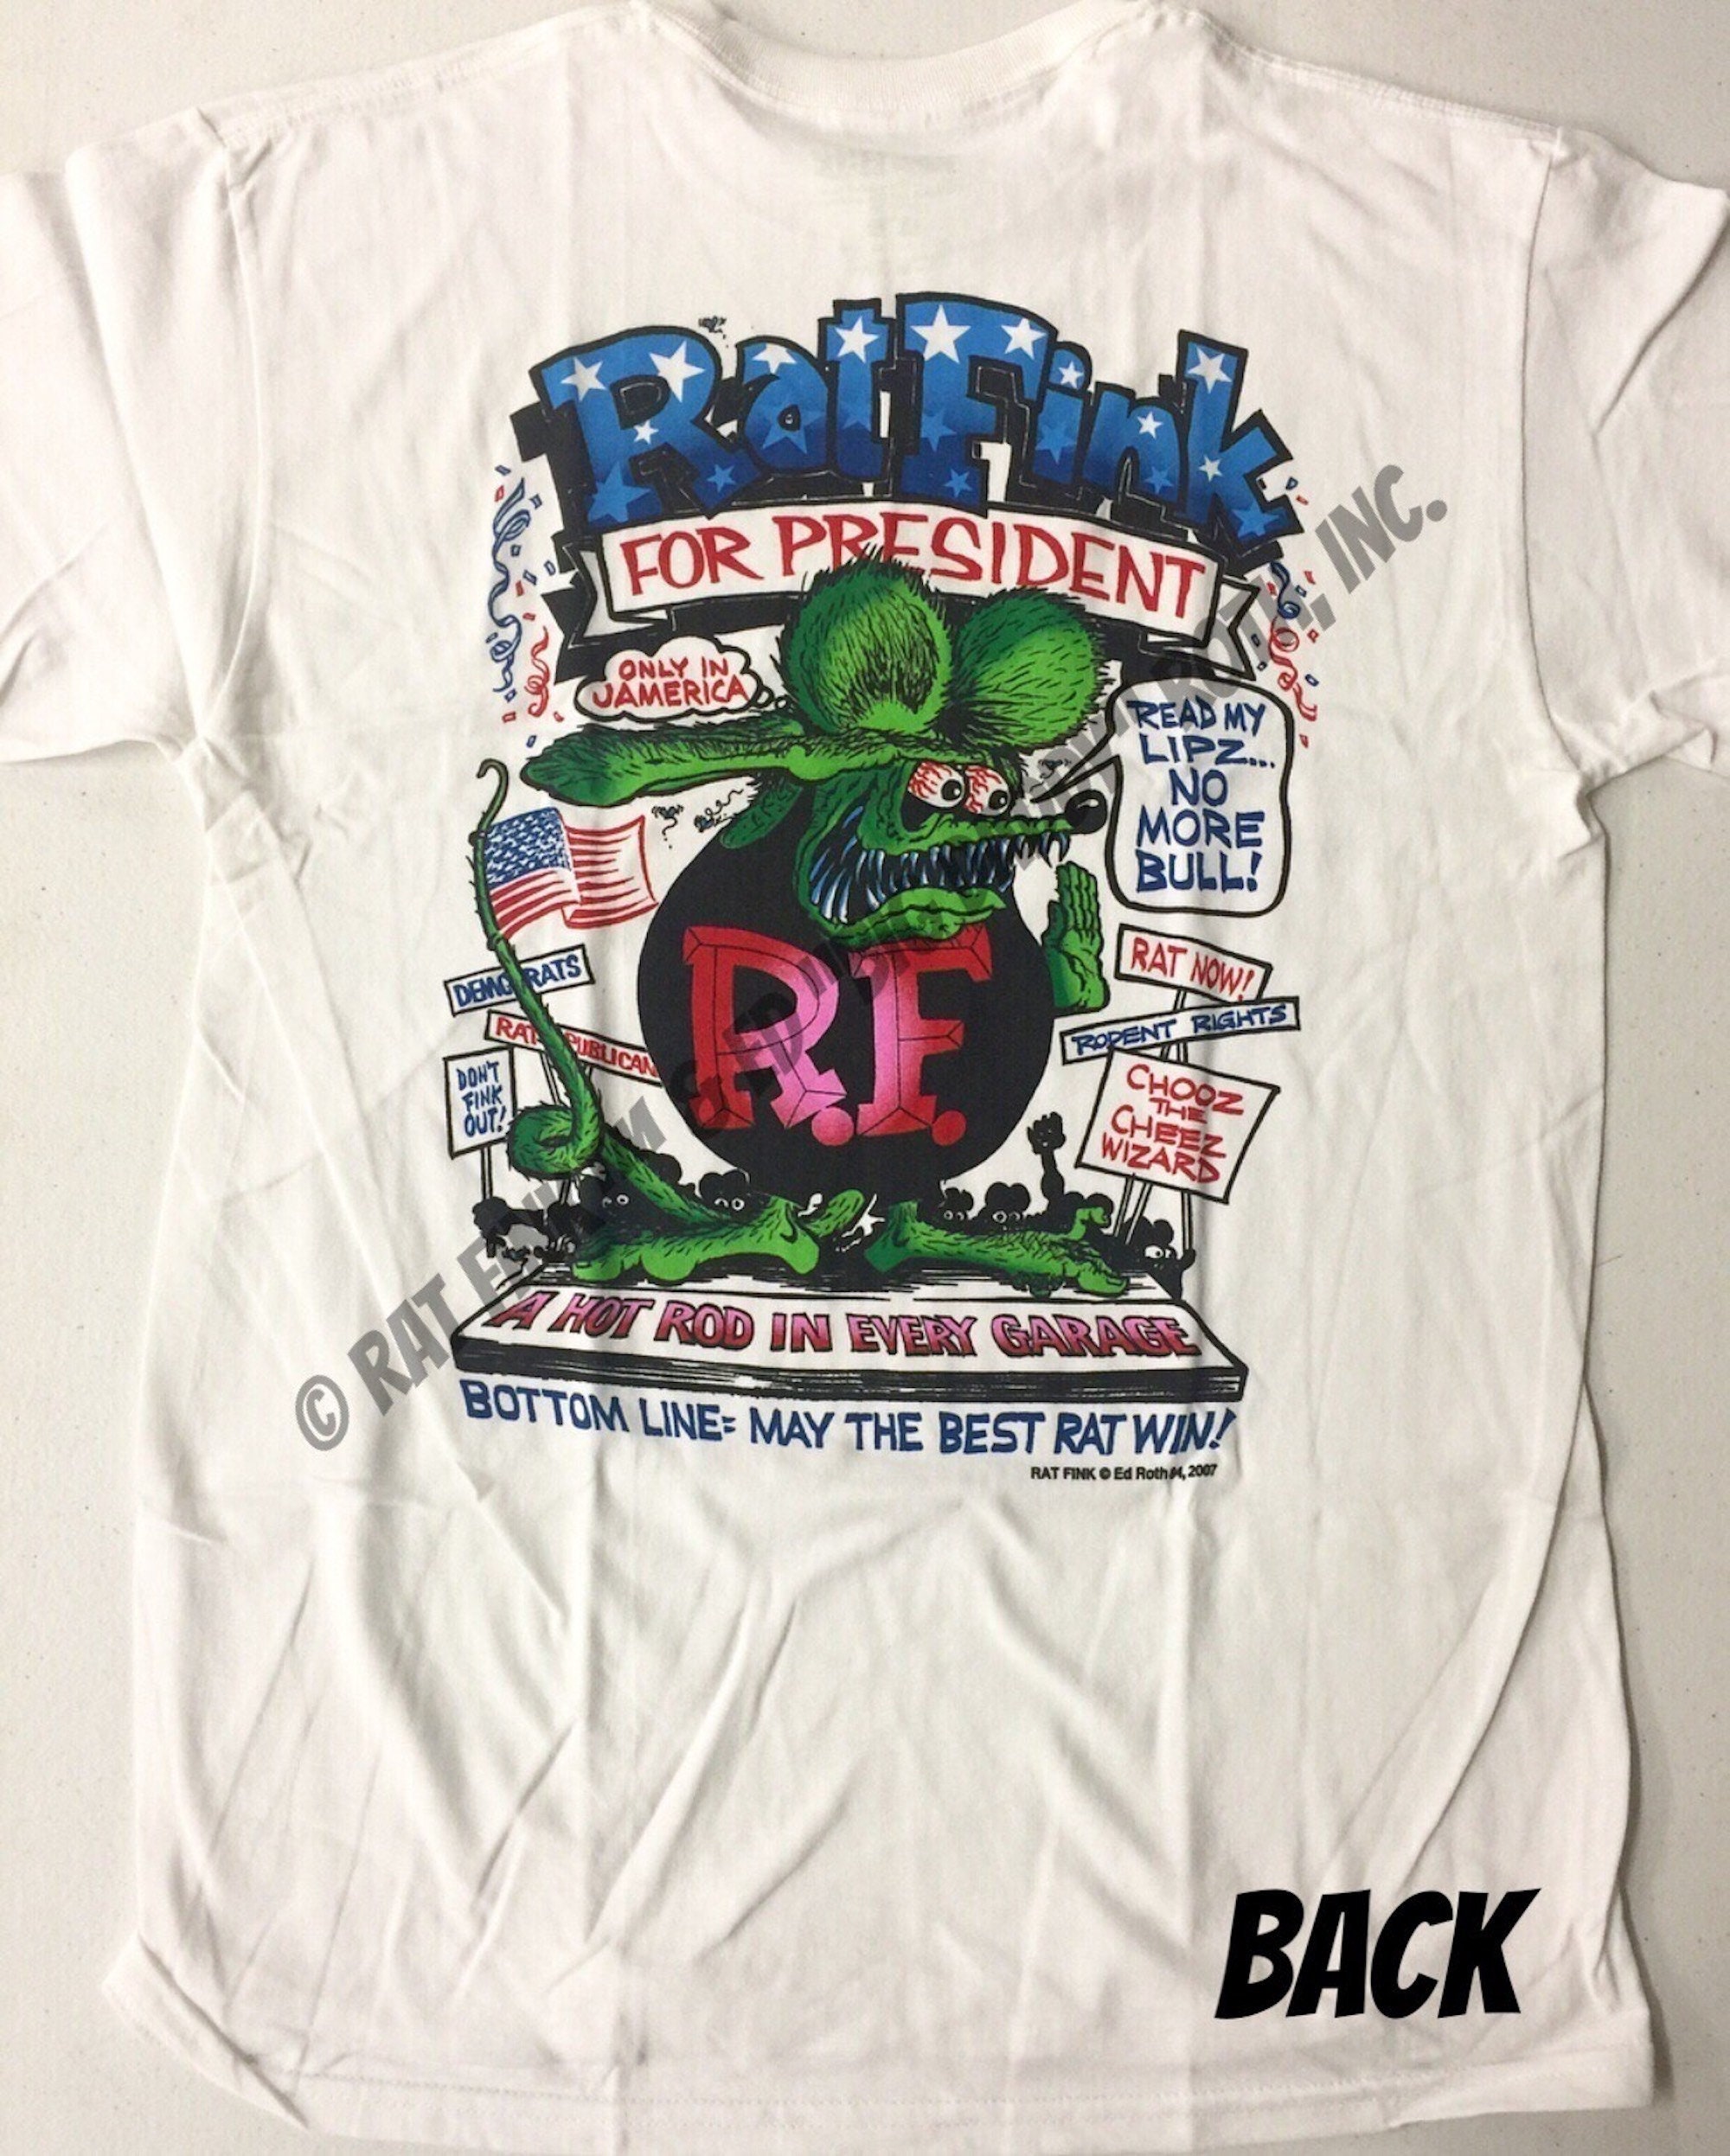 Ratfink T Shirts Big Daddy Clothing Ed Roth Signature Tee Automotive Shirts